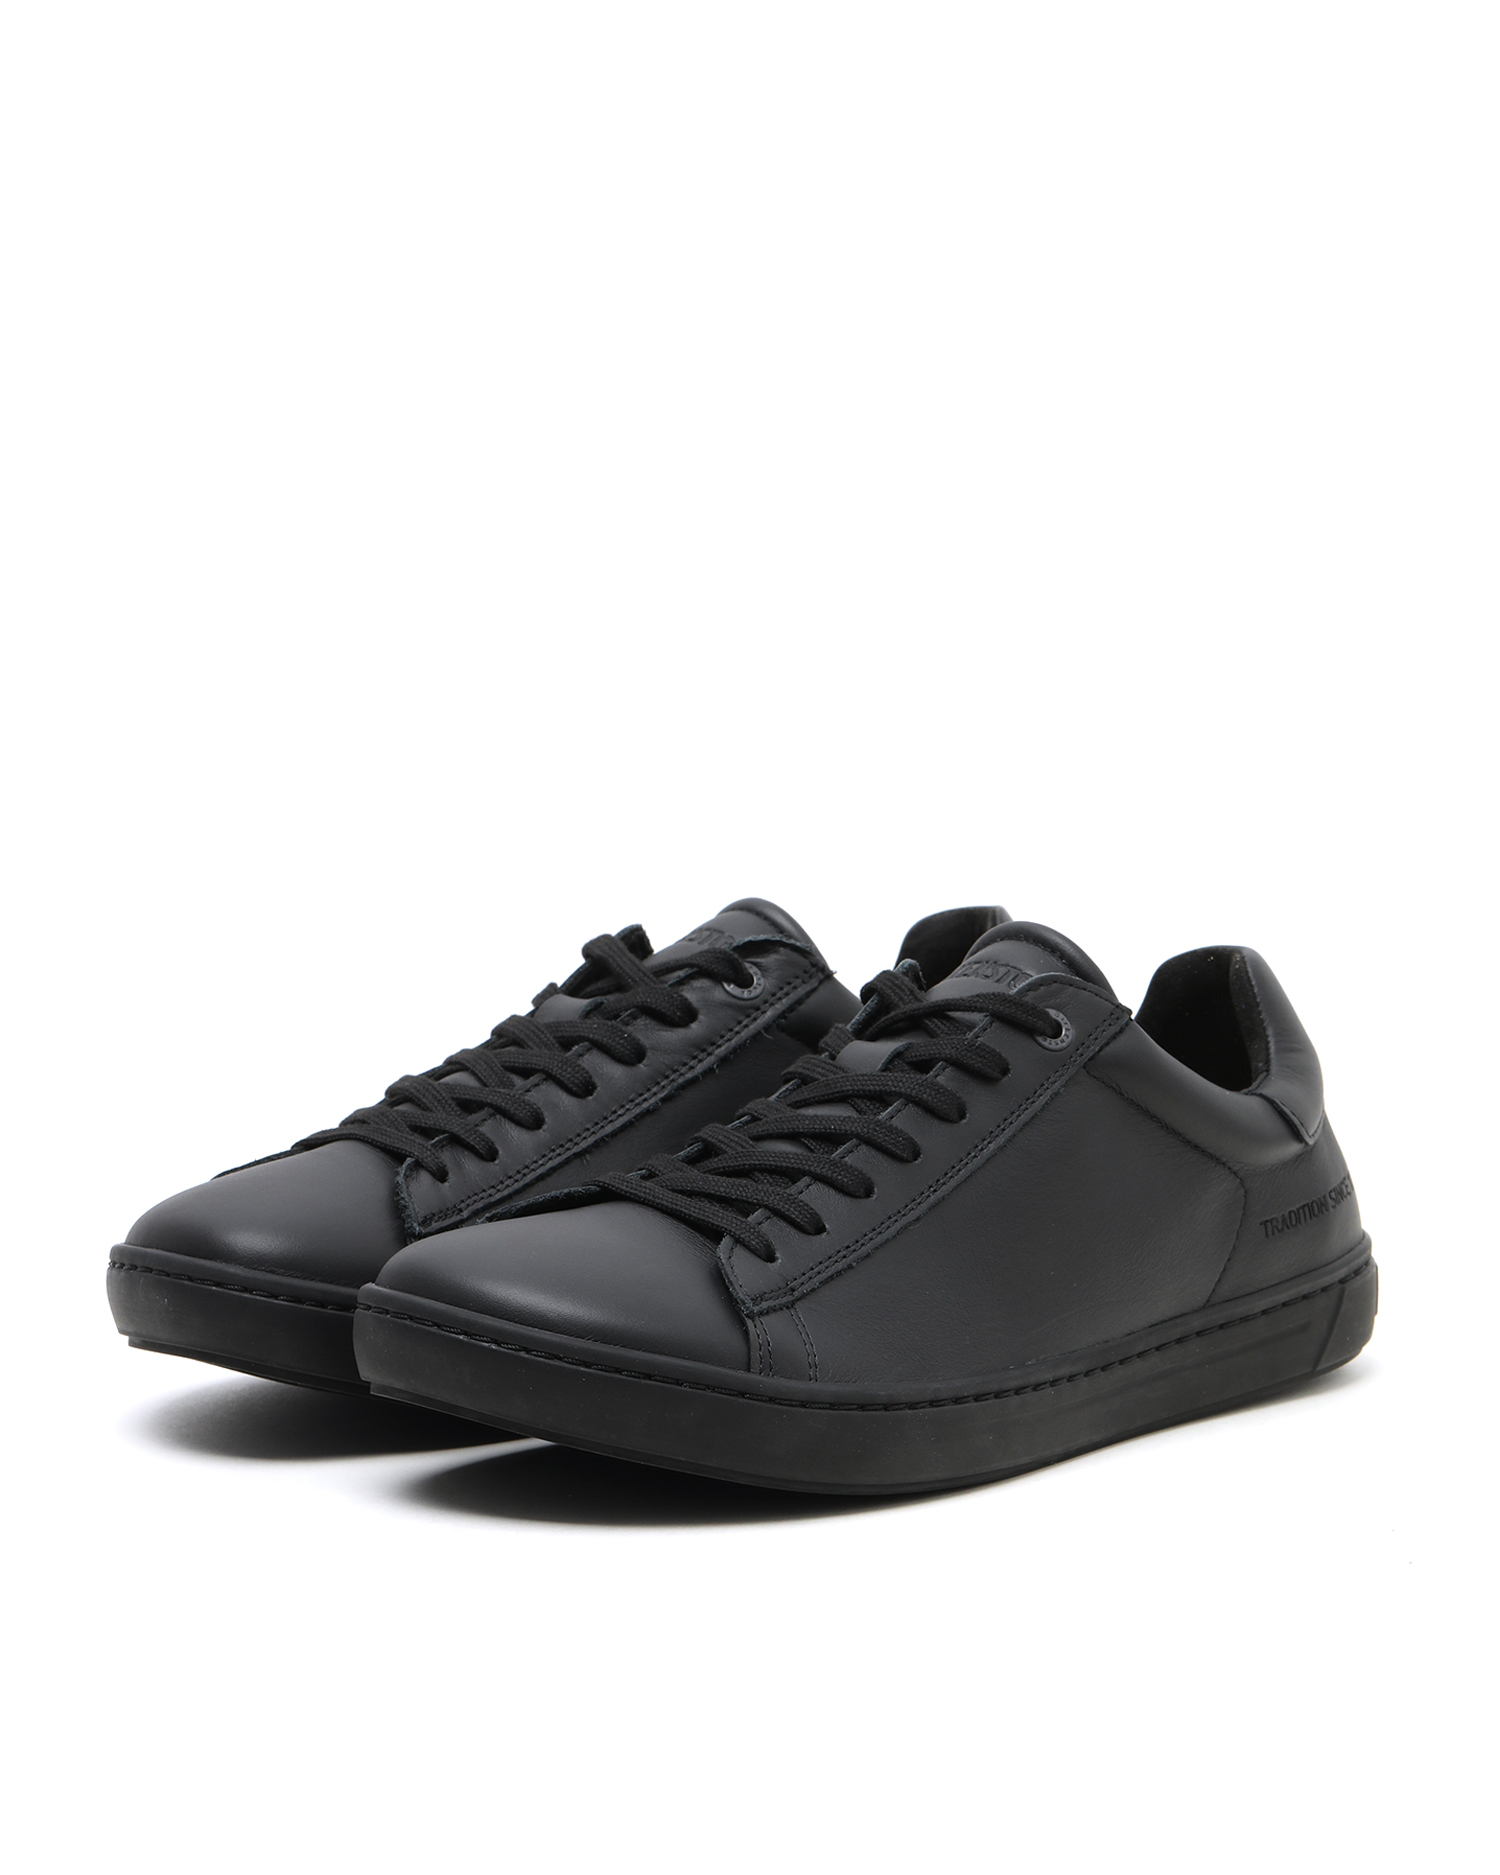 BIRKENSTOCK Levin leather sneakers